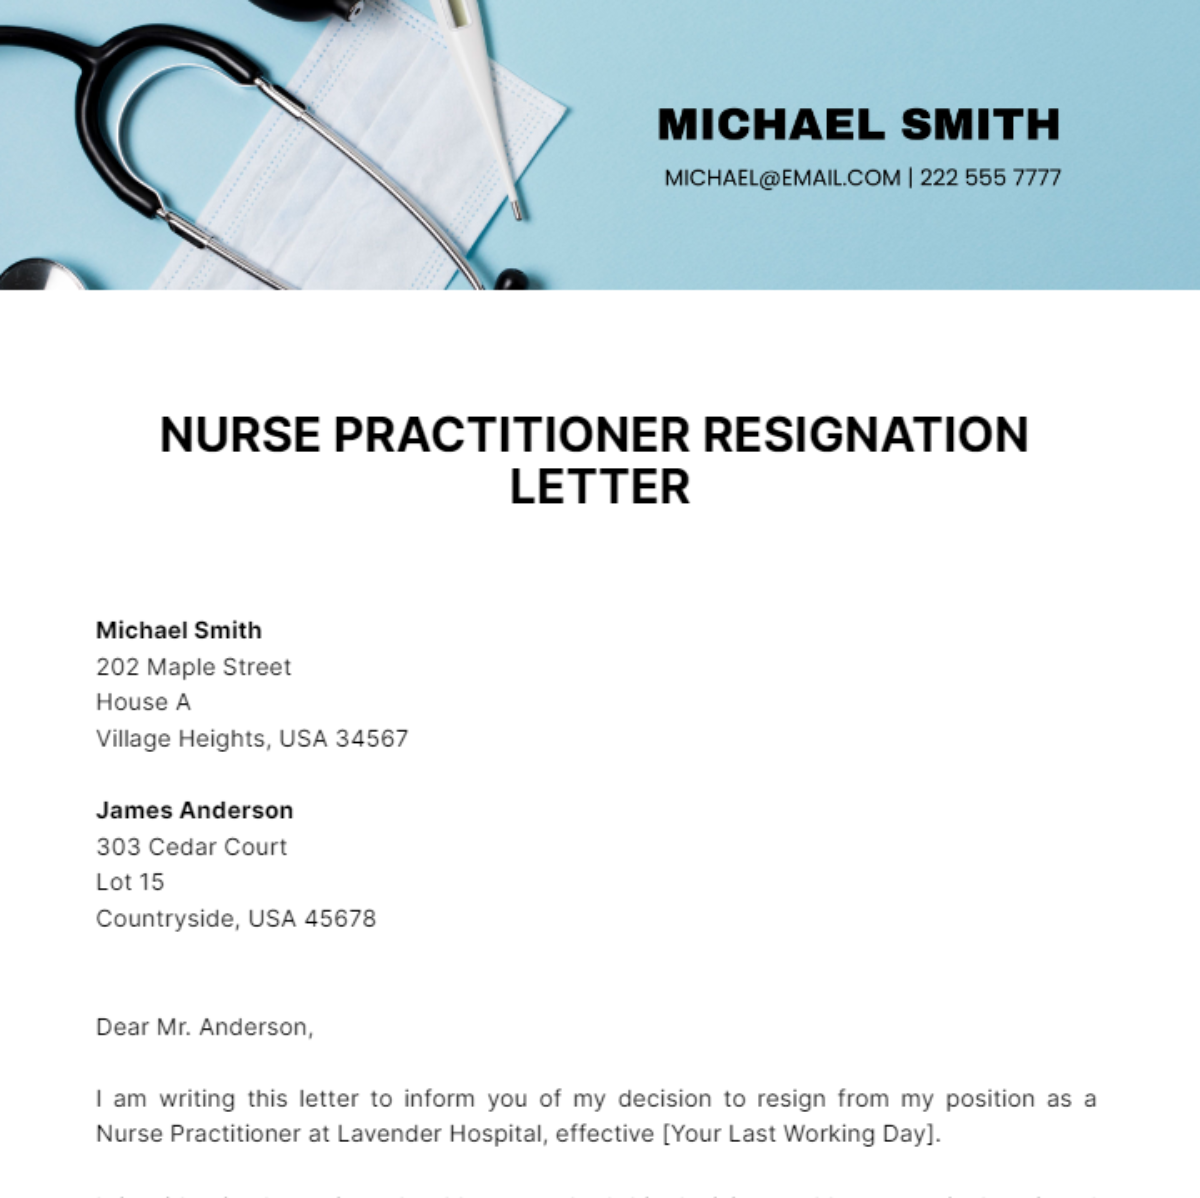 Nurse Practitioner Resignation Letter Template